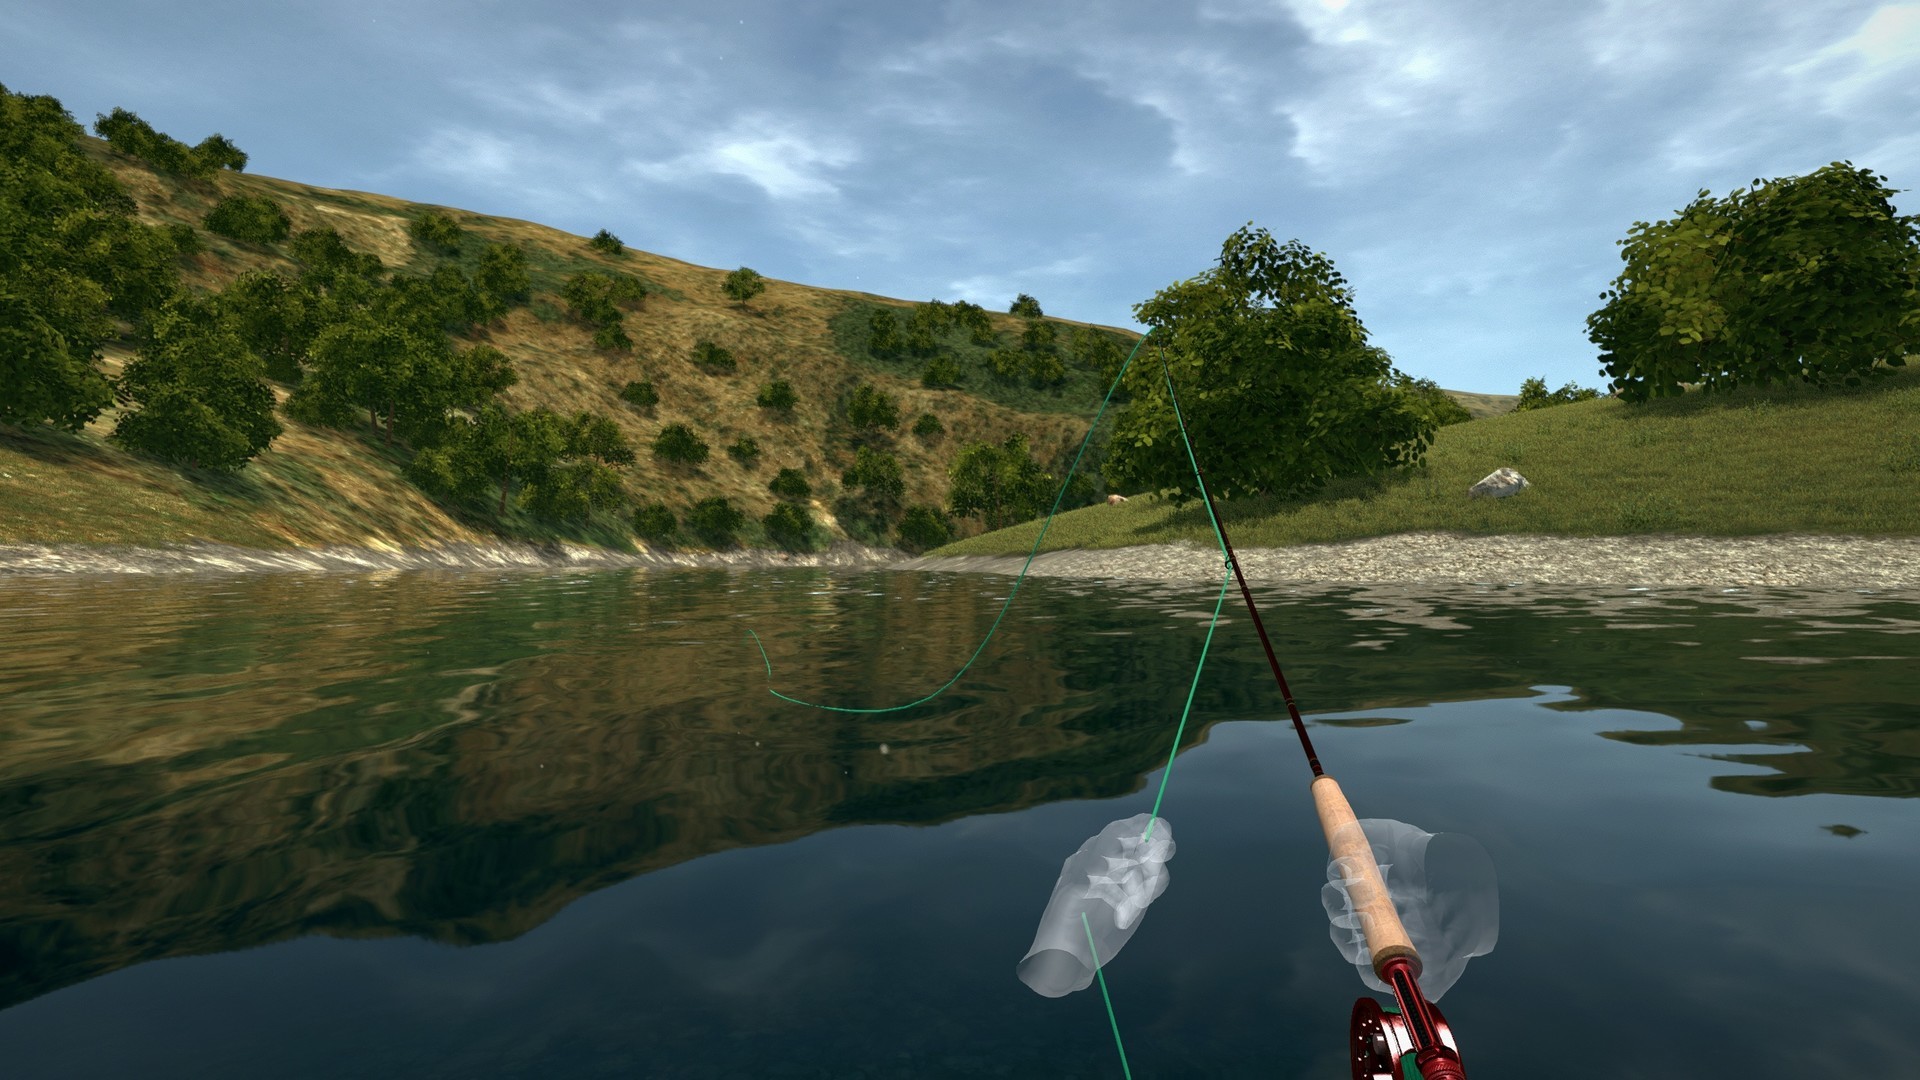 Ultimate Fishing Simulator 2 pe Steam